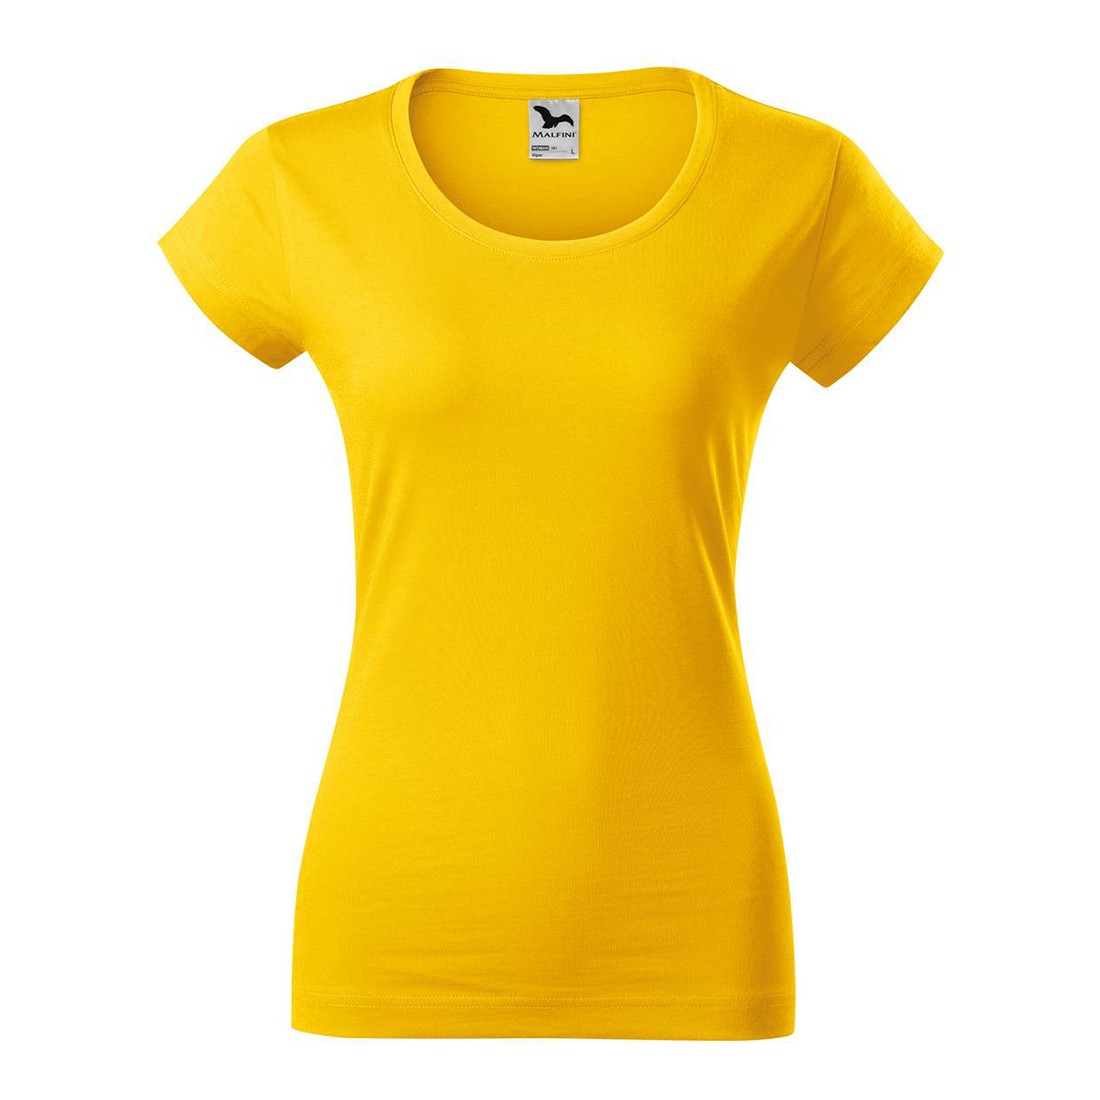 Tee-shirt femme VIPER - Les vêtements de protection